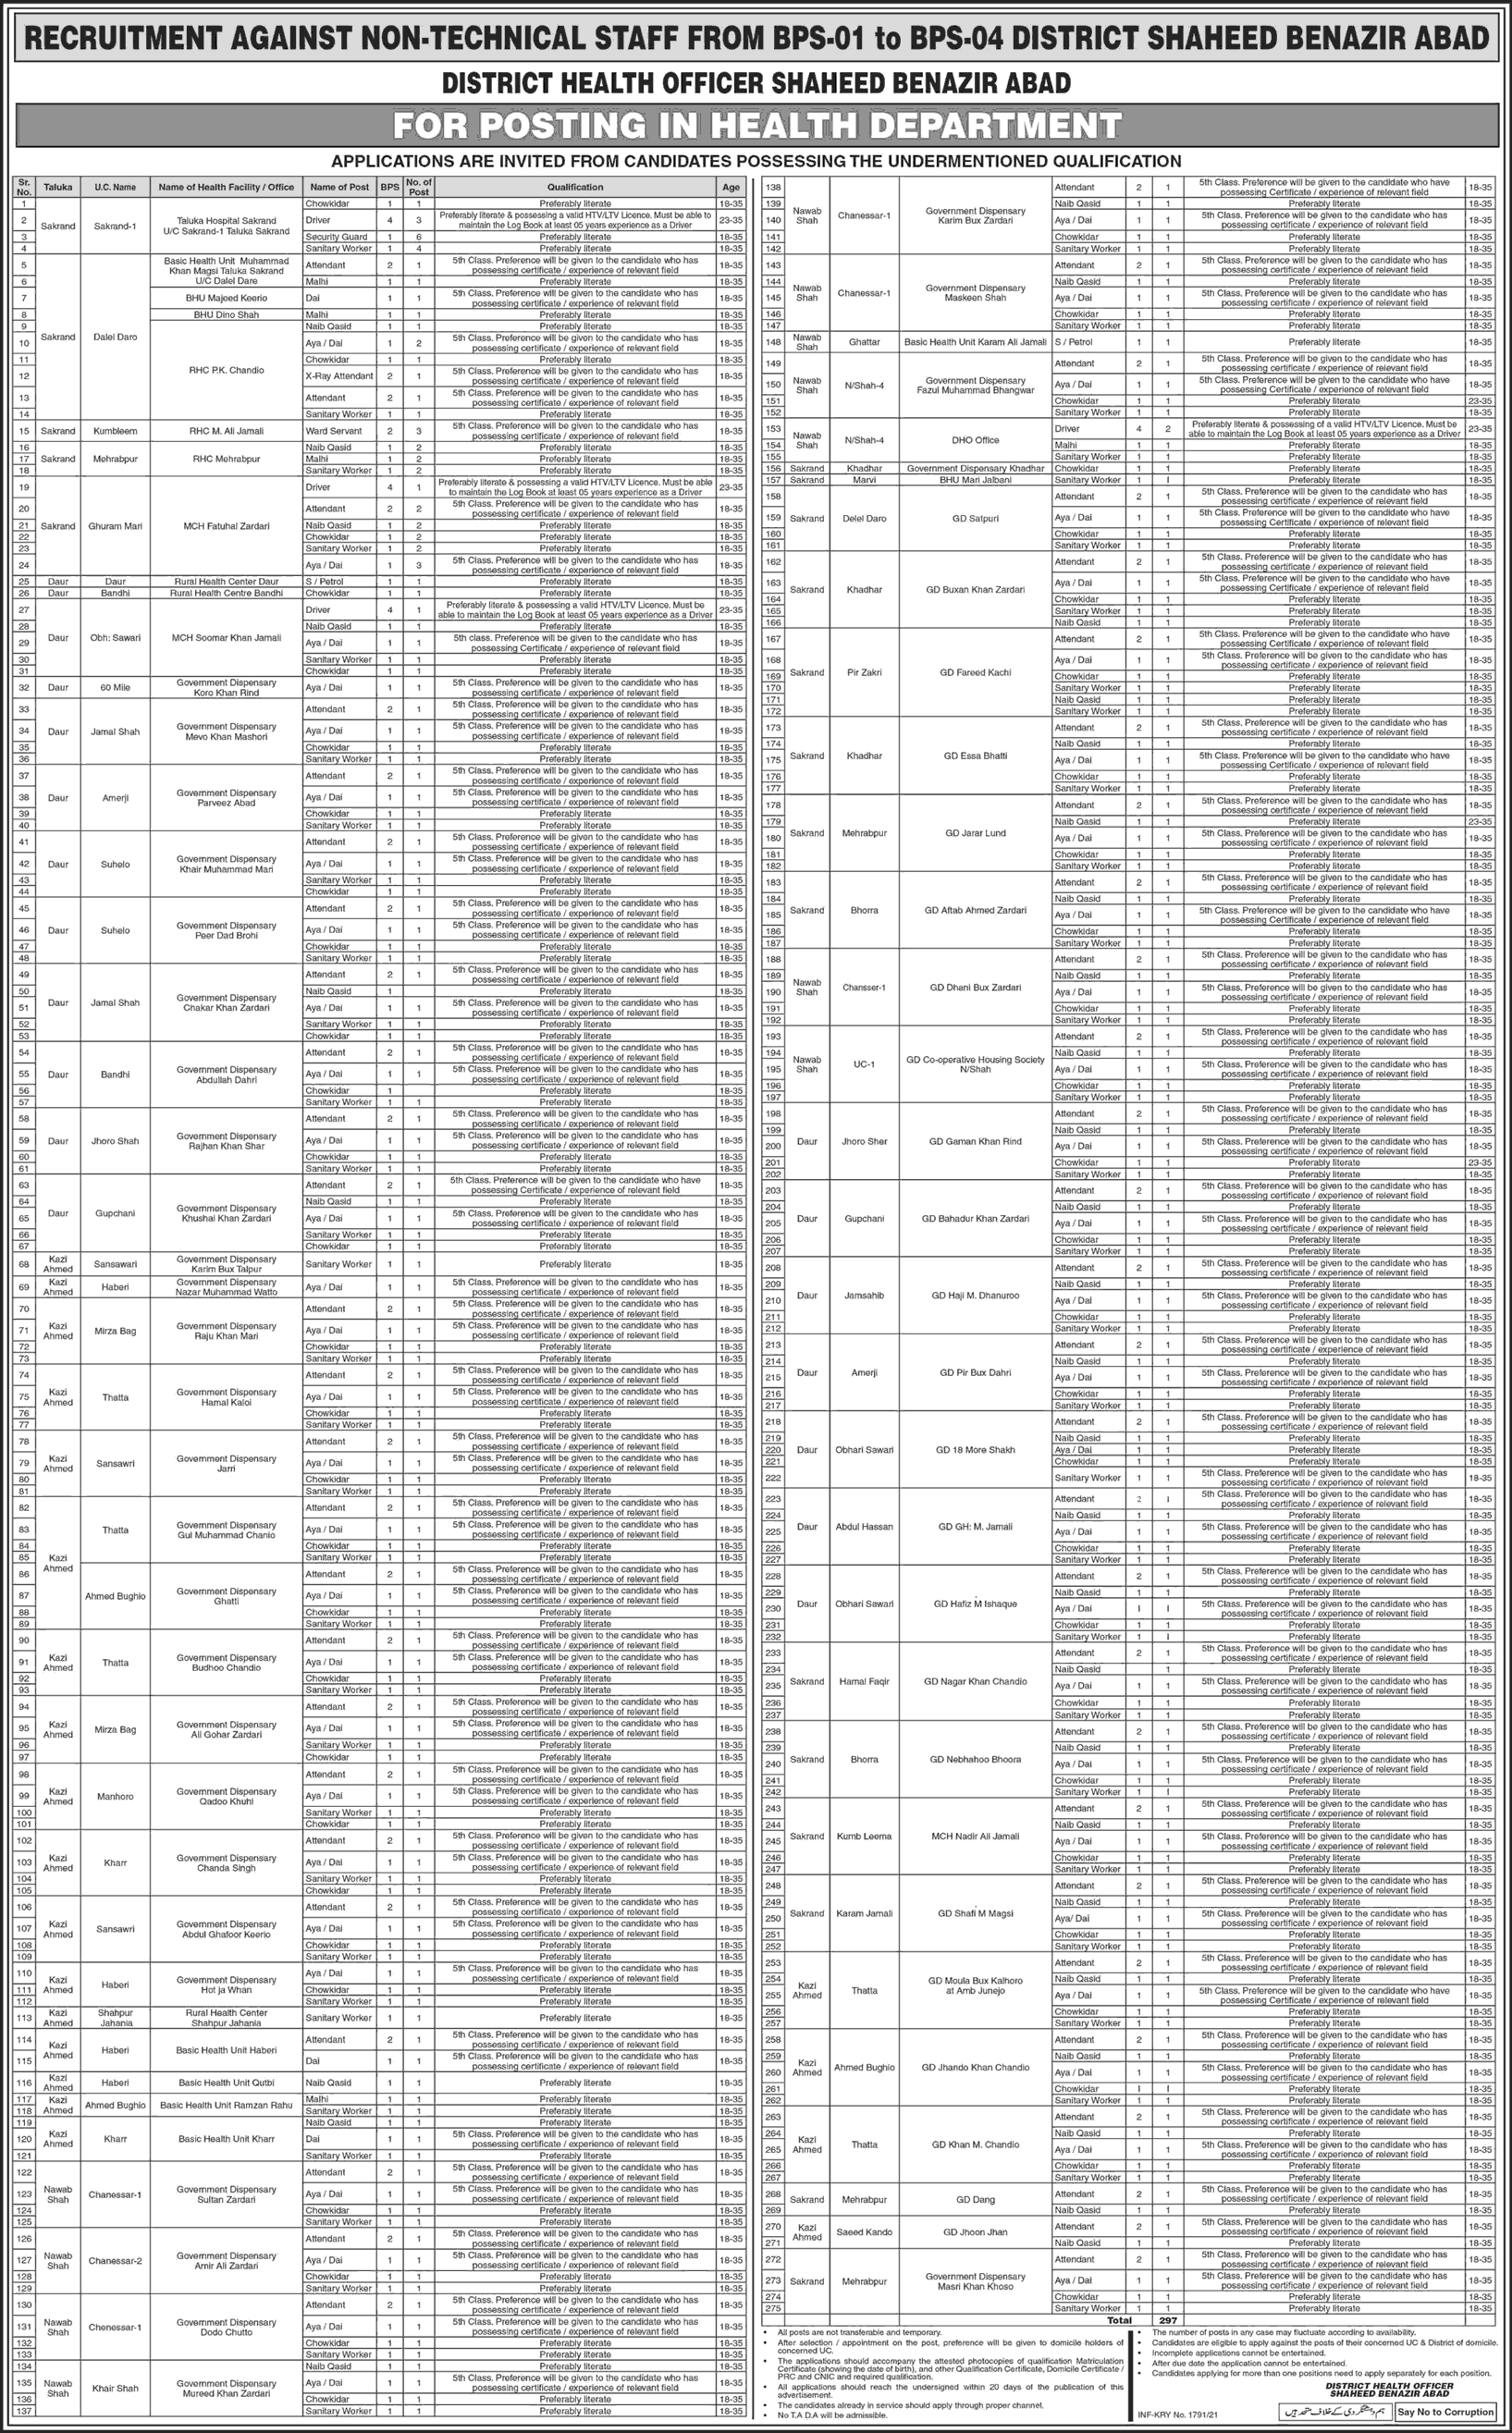 Health Department Shaheed Benazirabad Jobs 2021 May Chowkidar, Aya / Dai & Others Latest